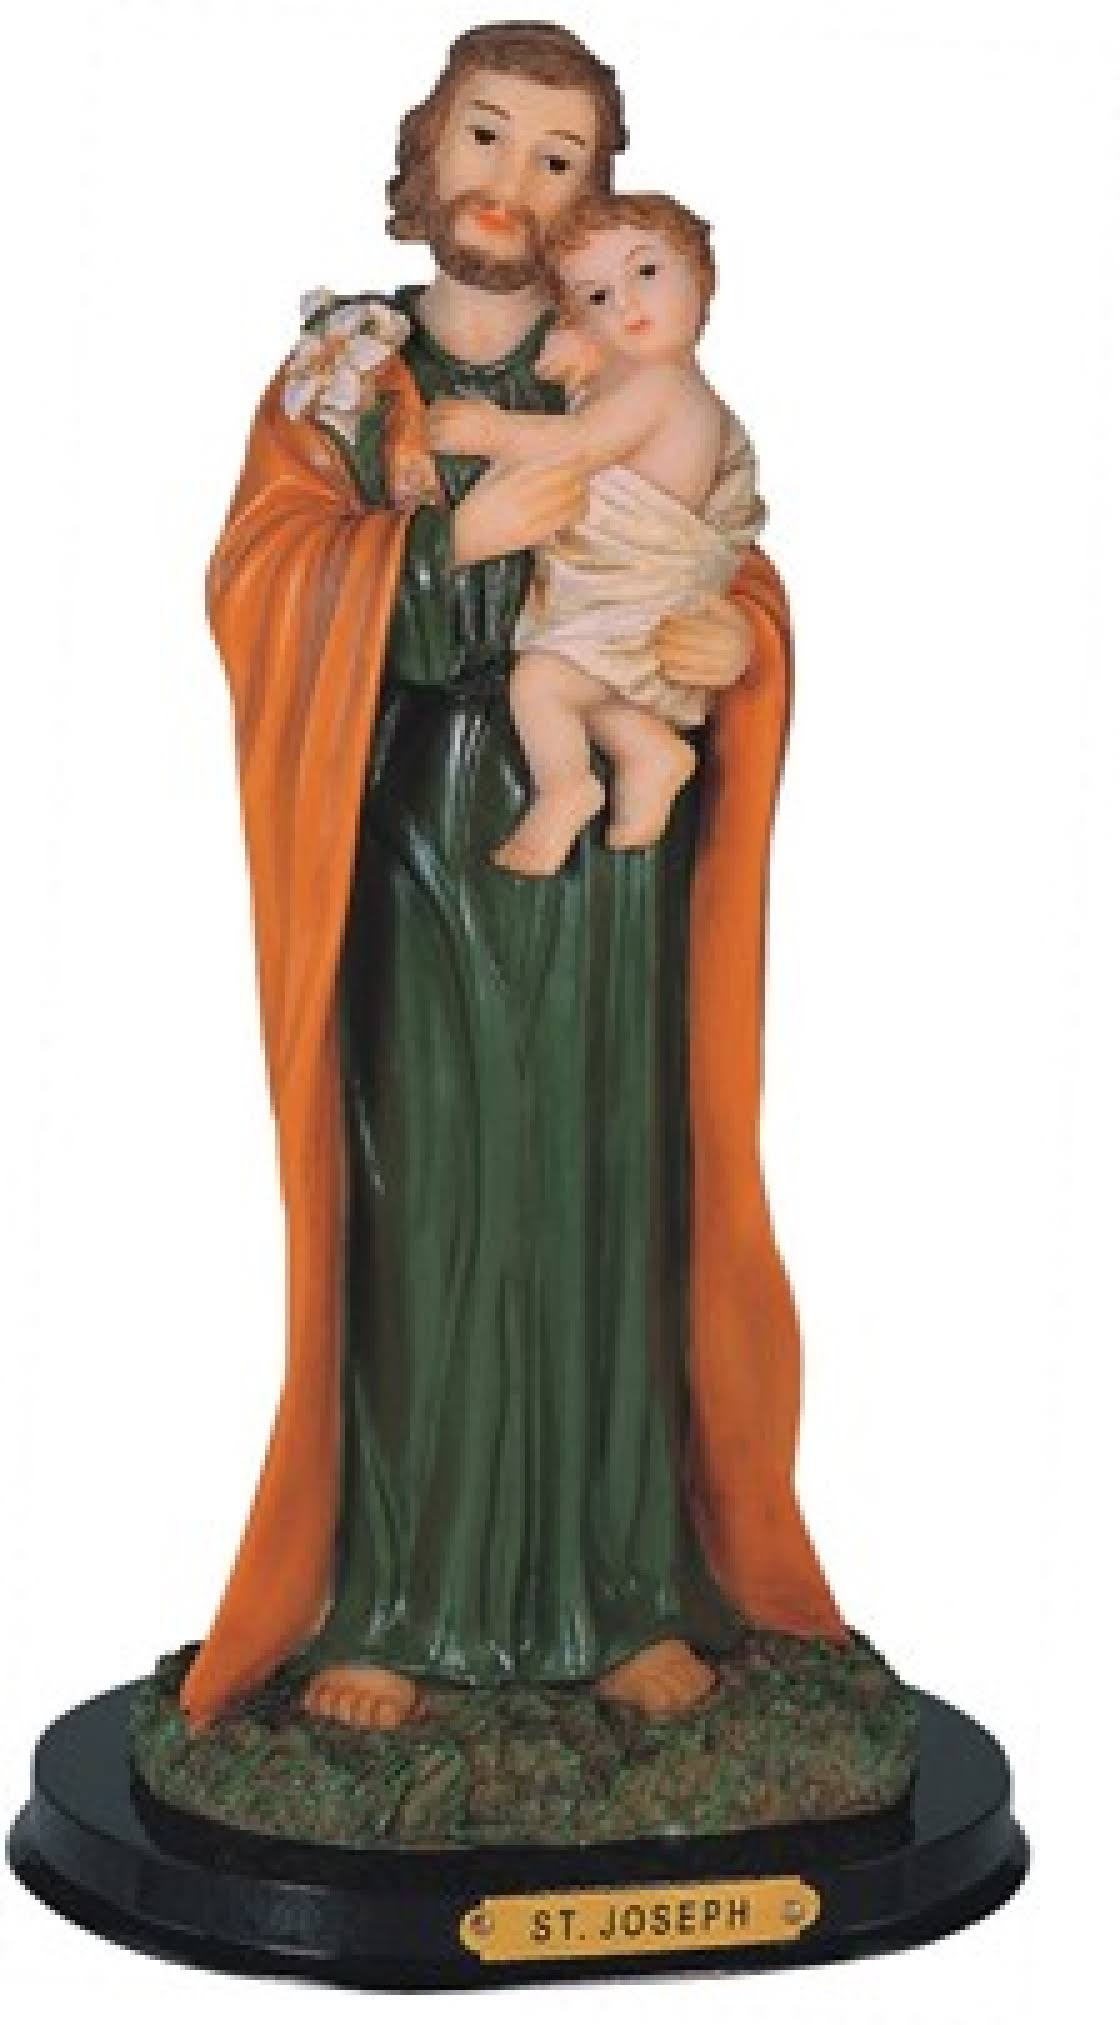 Stealstreet SS-G-312.09 Saint Joseph Holy Figurine Religious Decoration Statue Decor, 12"